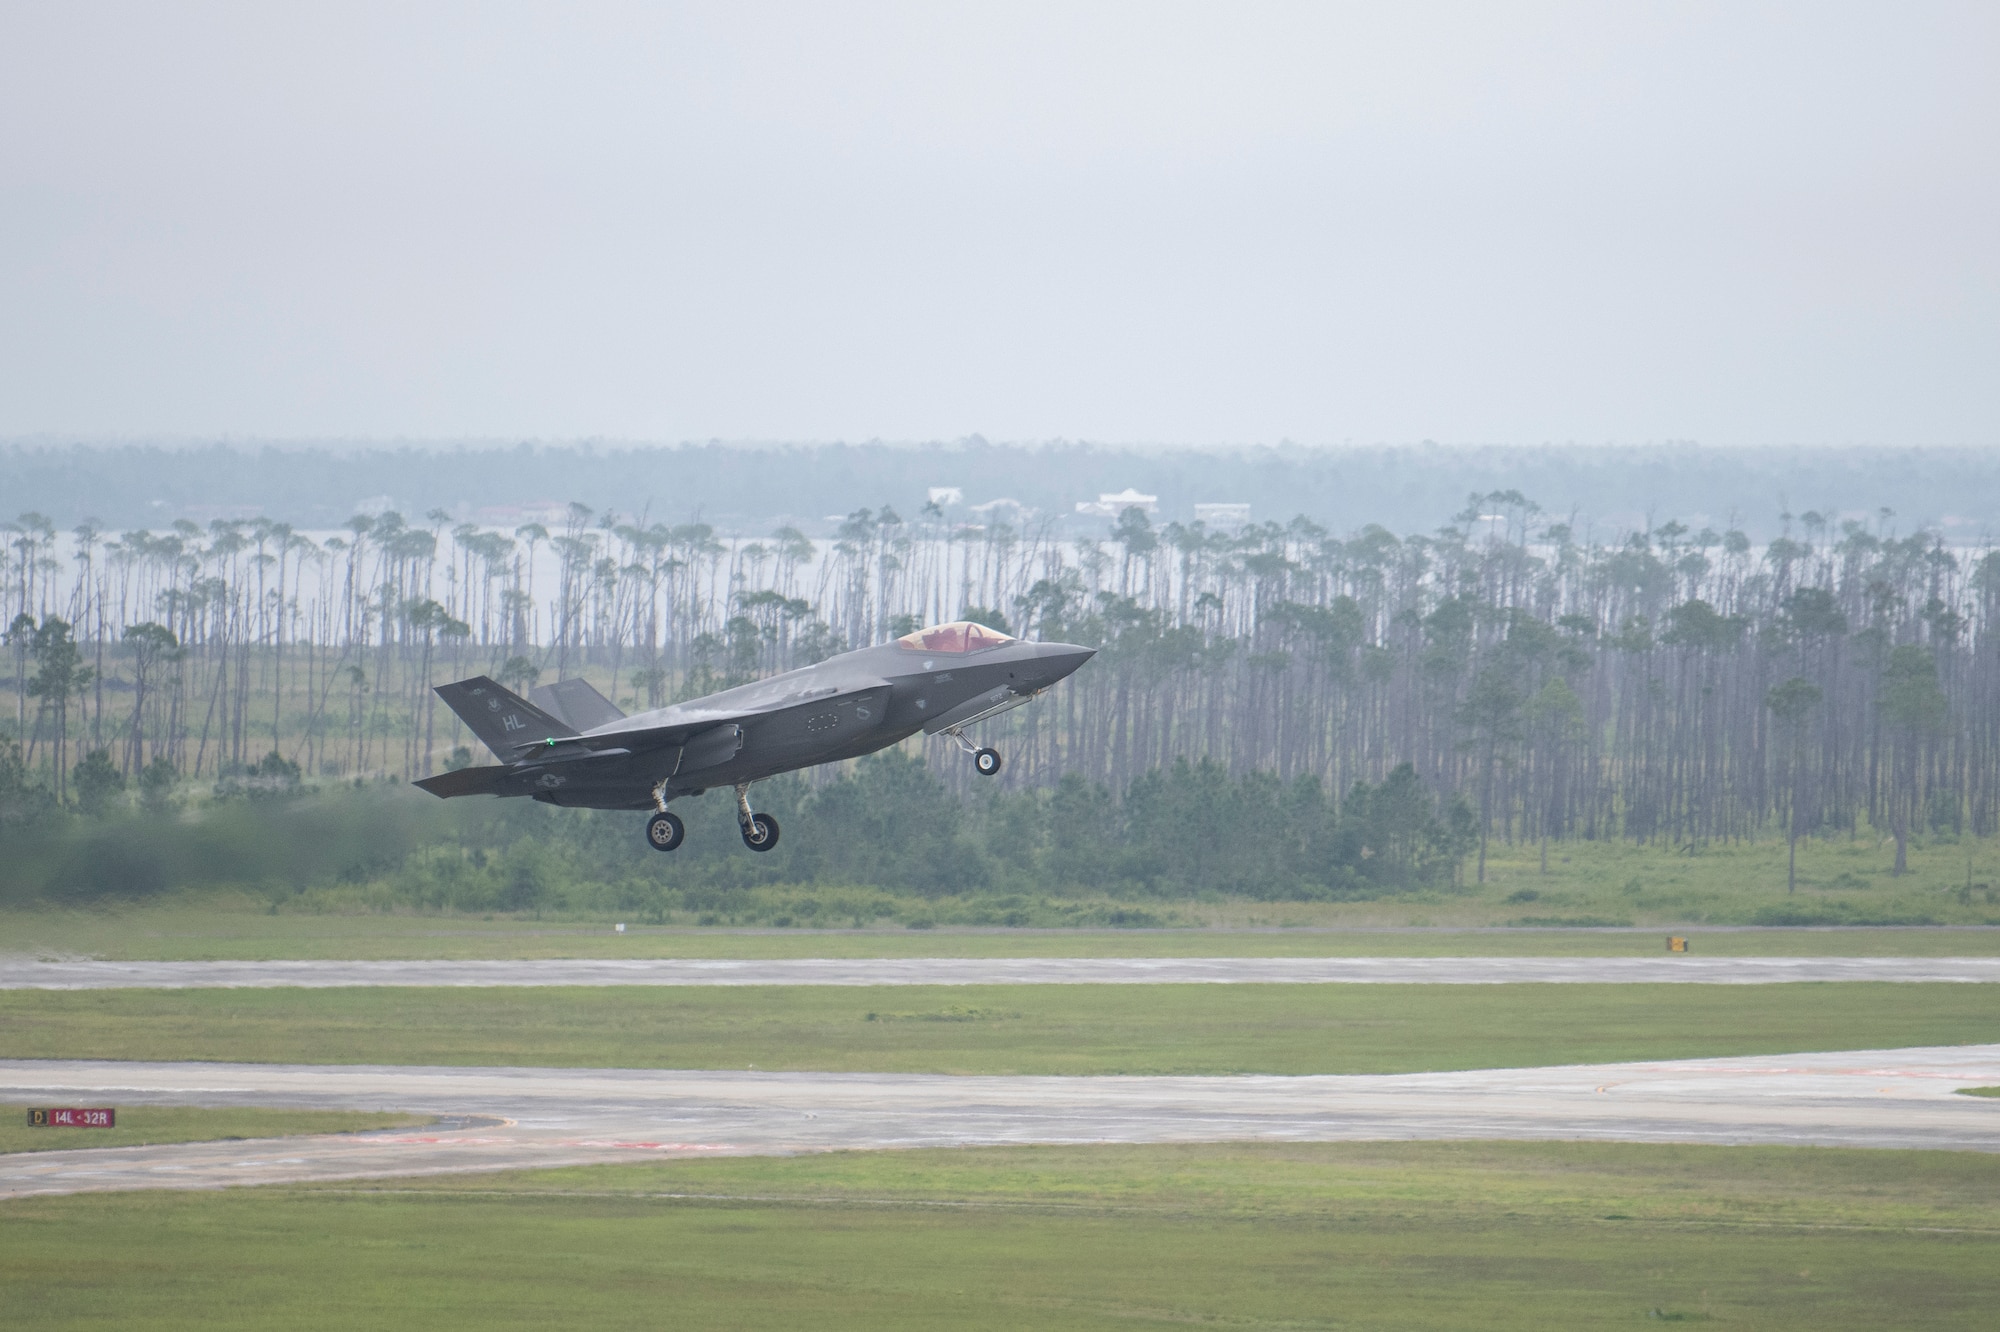 A U.S. Air Force F-35A Lightning II takes off